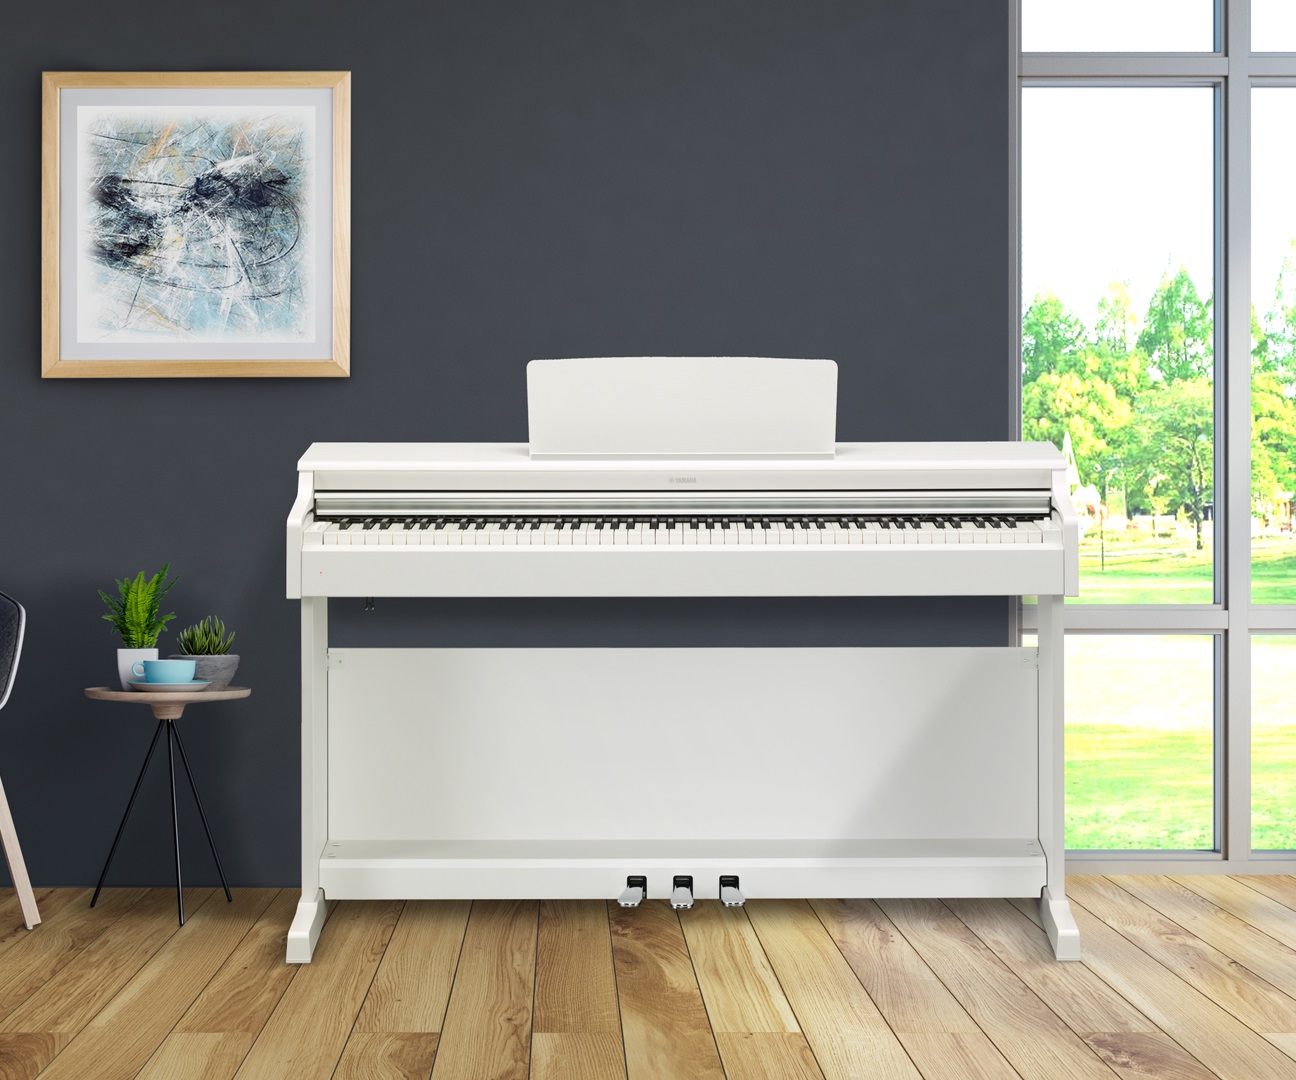 Yamaha Ydp-164 Arius - White - Digital piano with stand - Variation 2